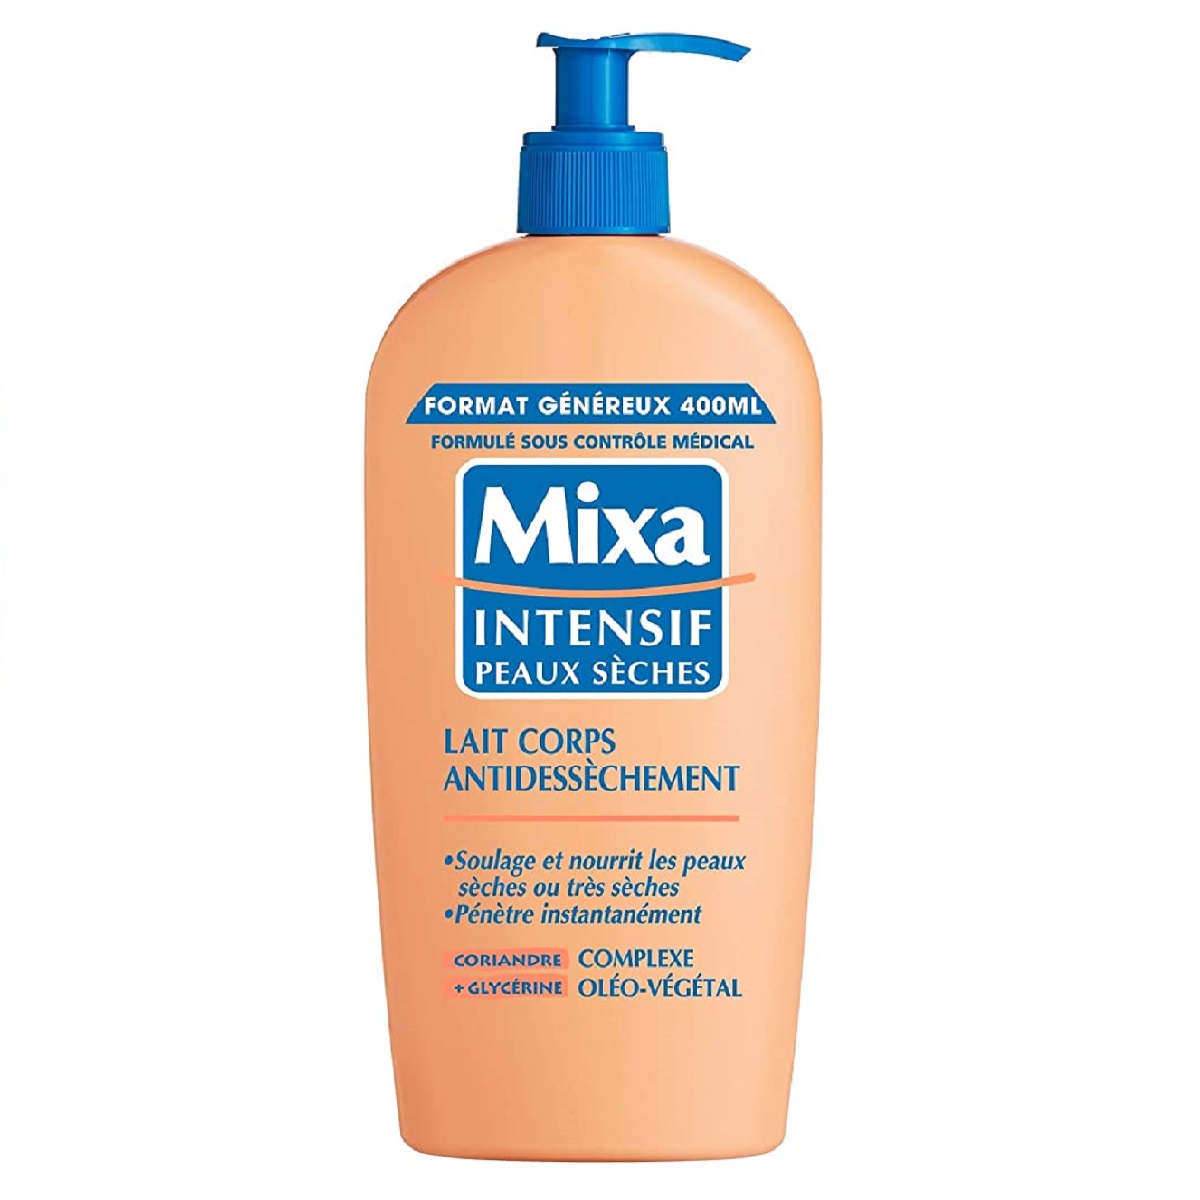 Mixa Intensive anti dry skin 250ml